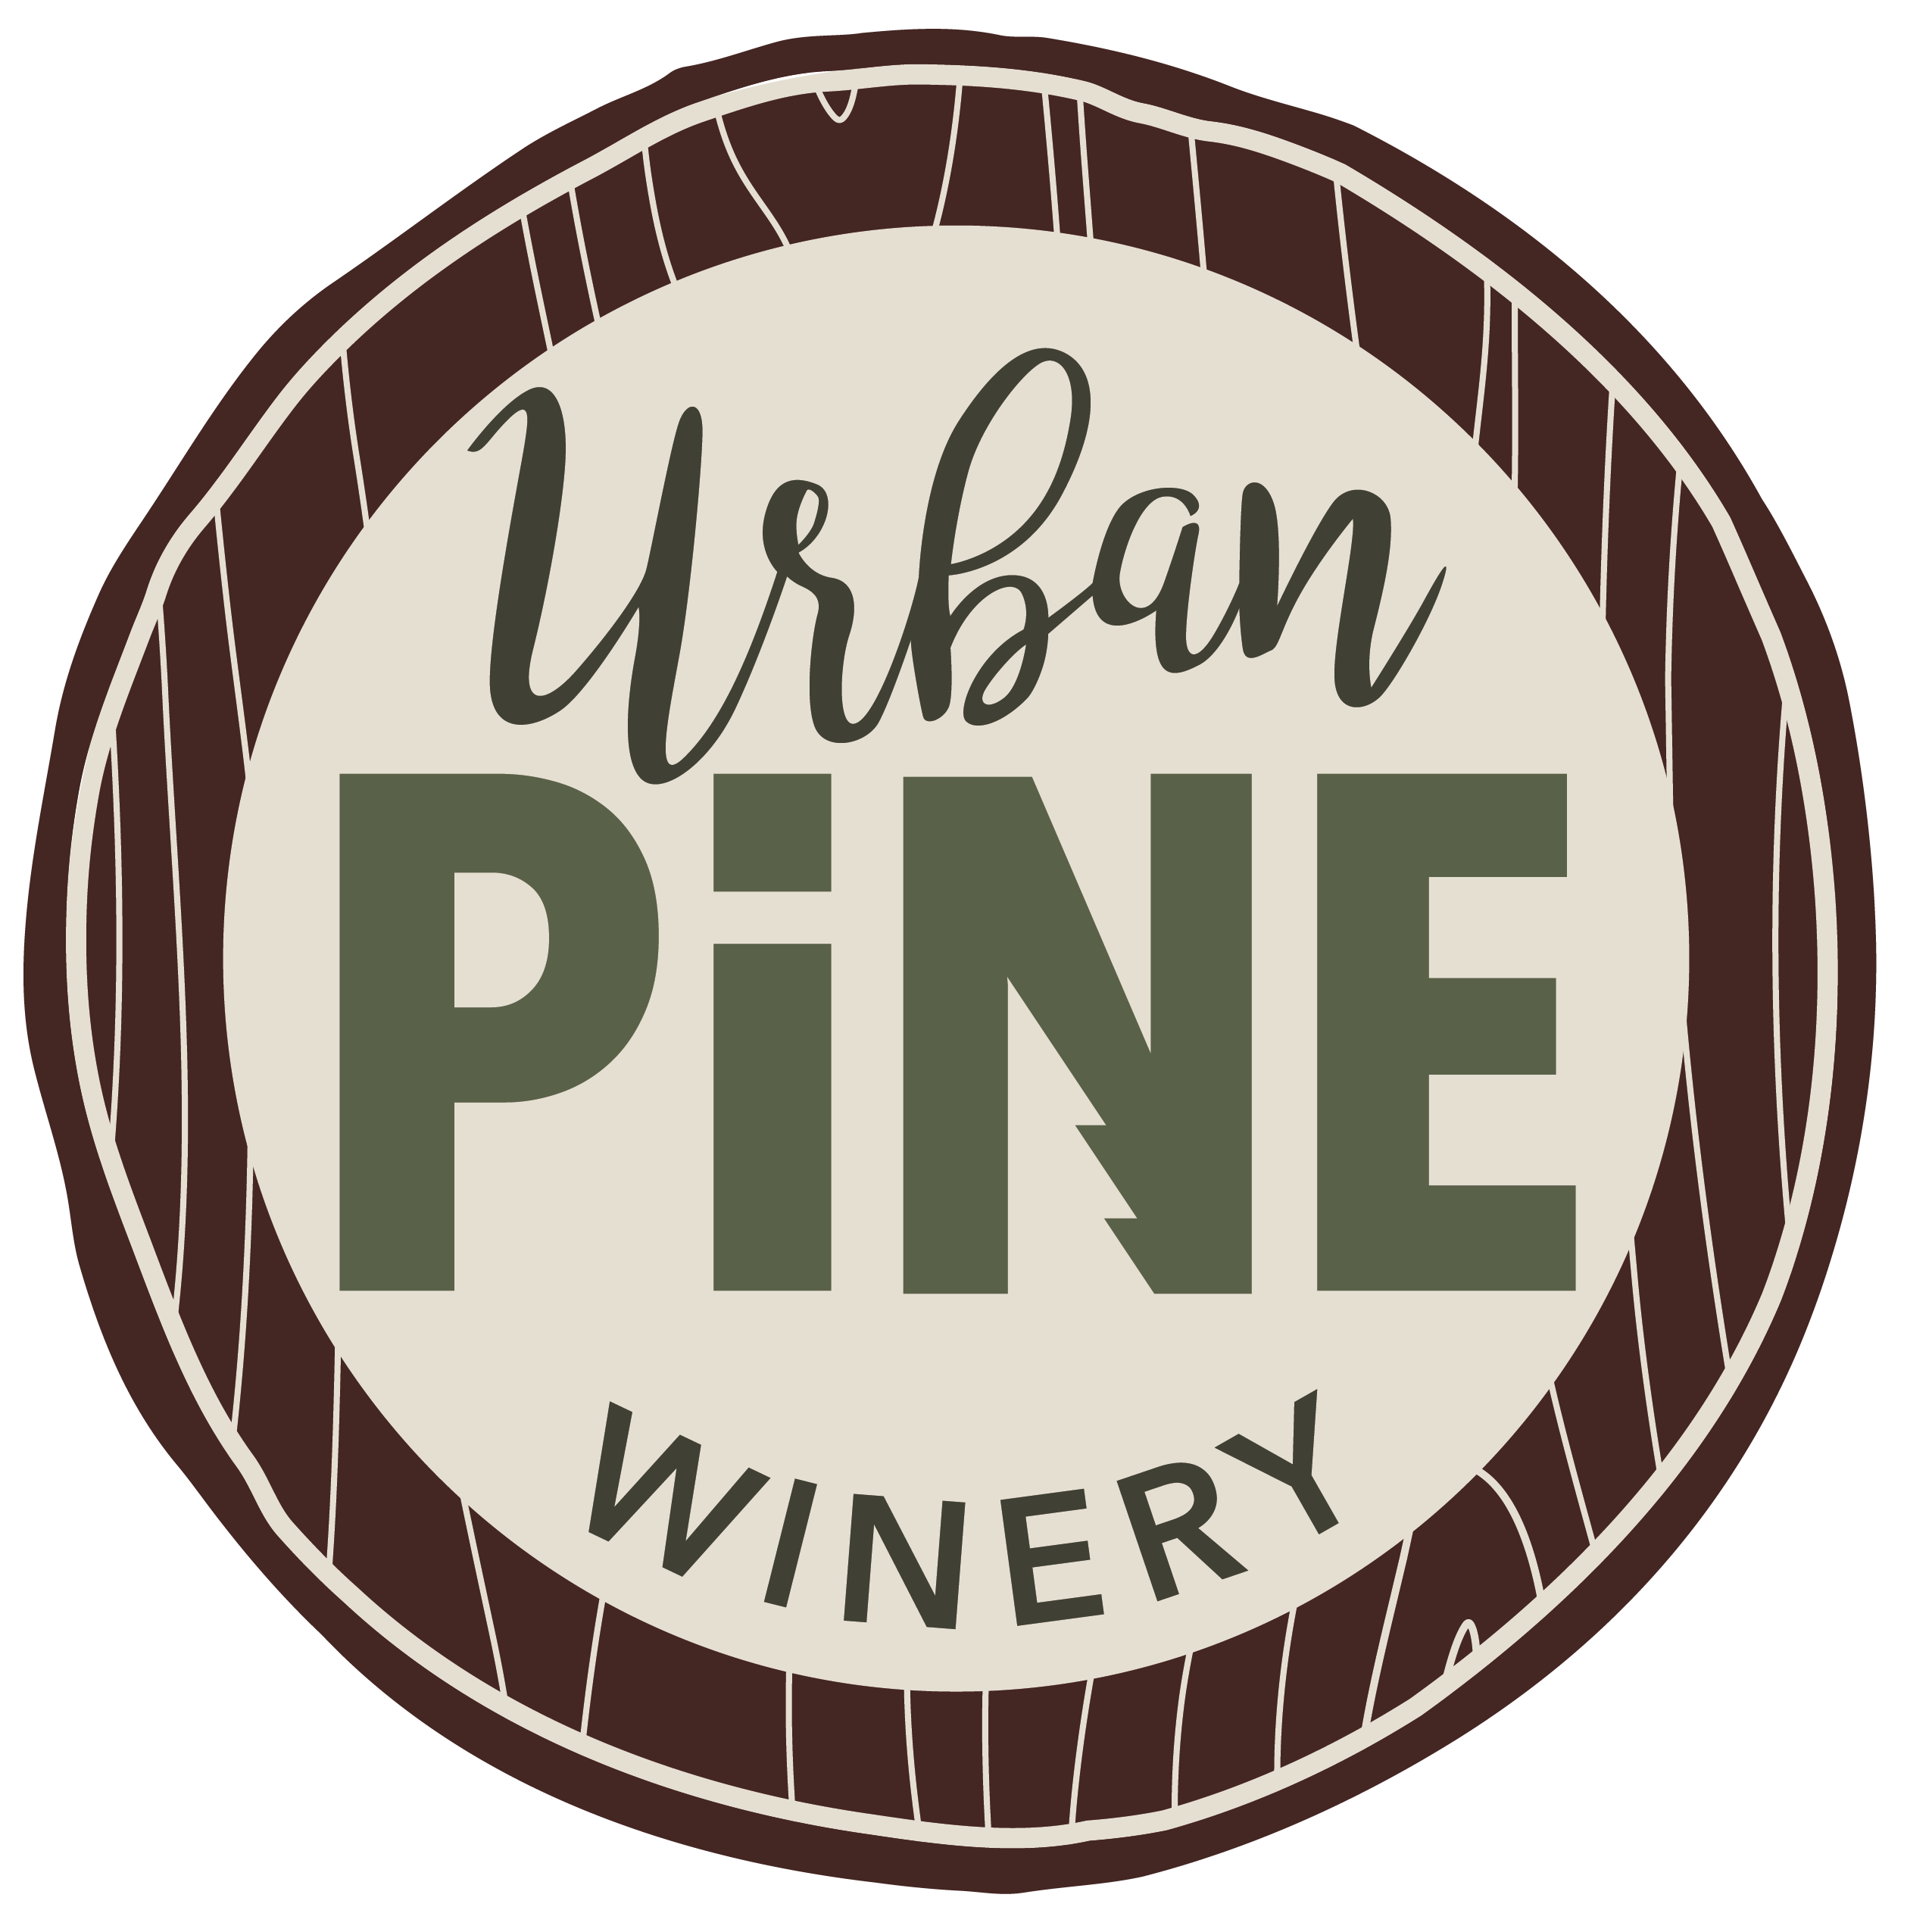 Urban Pine Winery